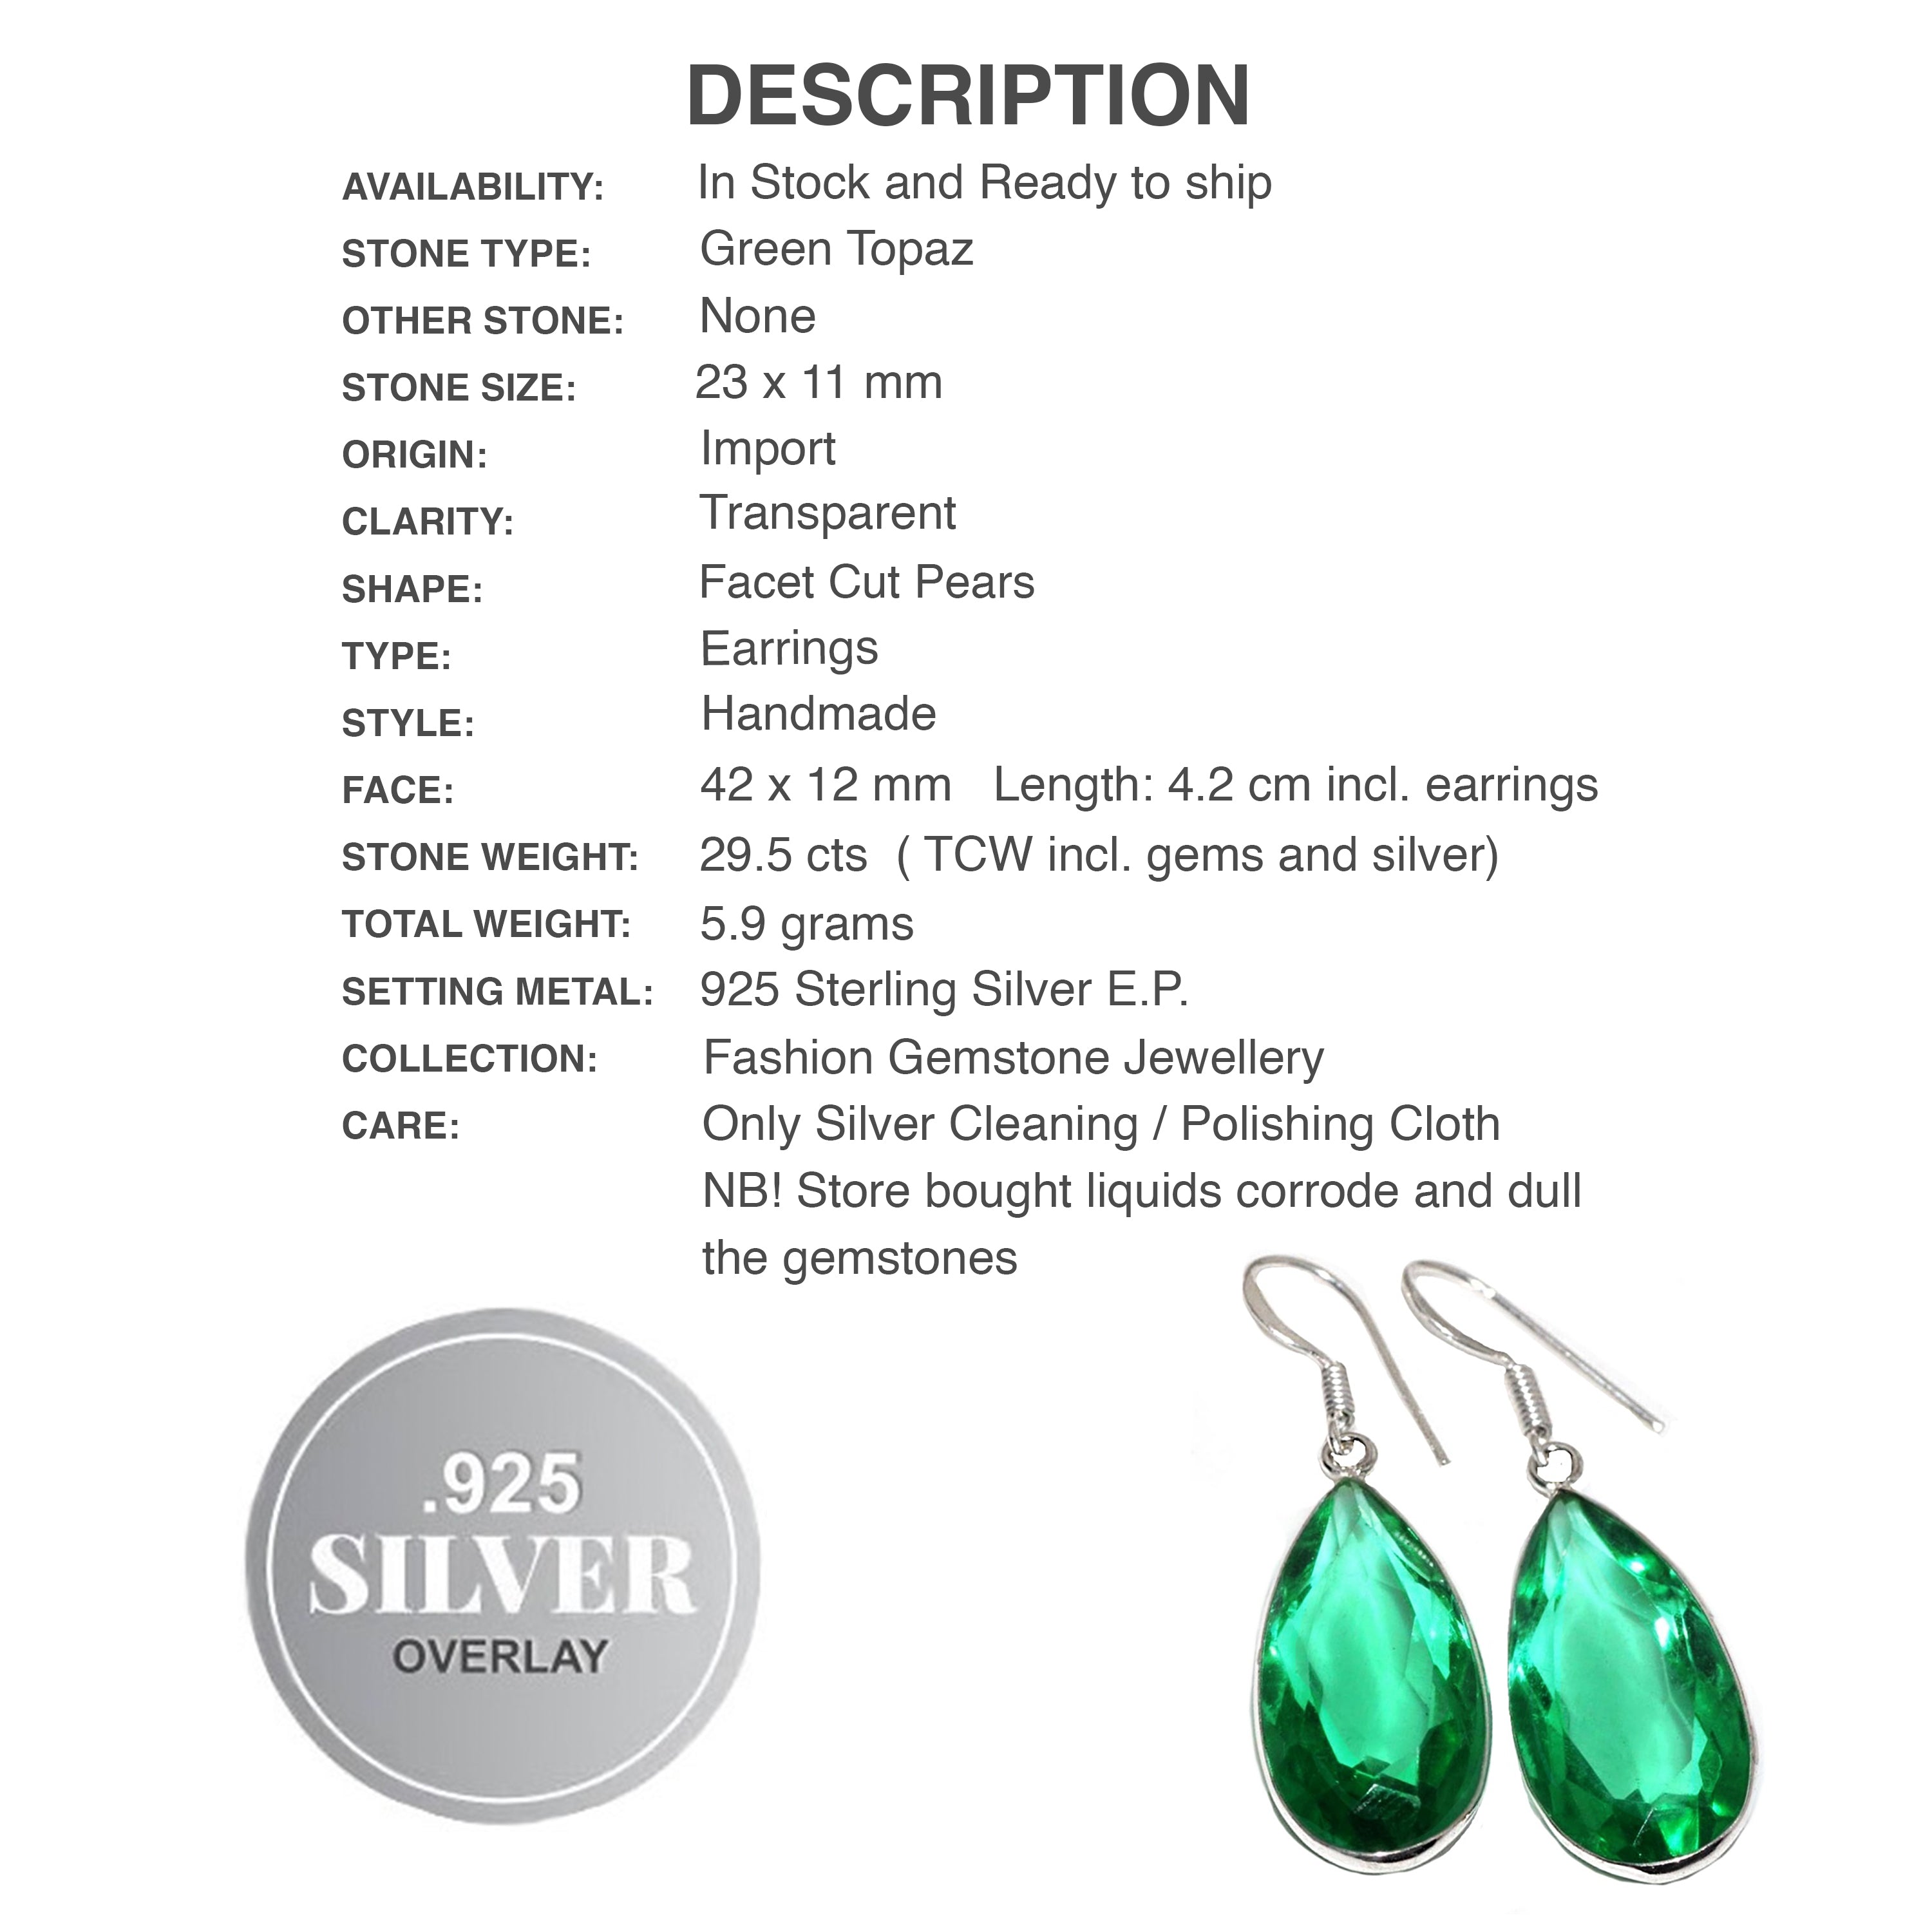 Handmade Faceted Green Topaz Gemstone Pears 925 Sterling Silver Earrings